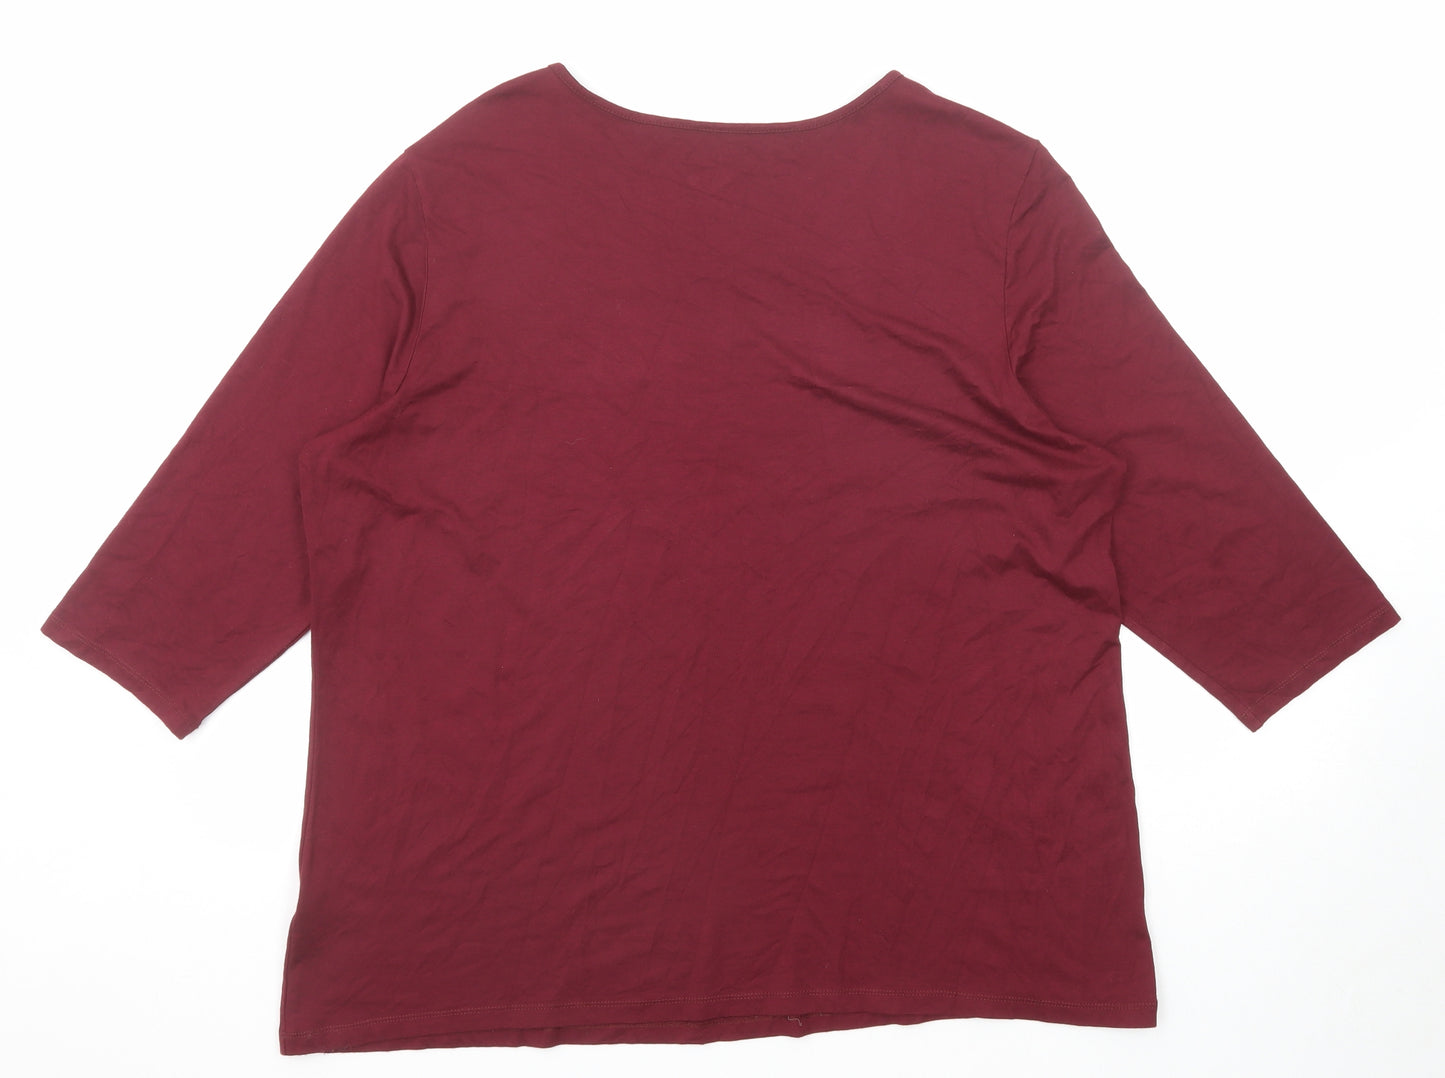 C&A Womens Red Viscose Basic T-Shirt Size XL Boat Neck - Embellished